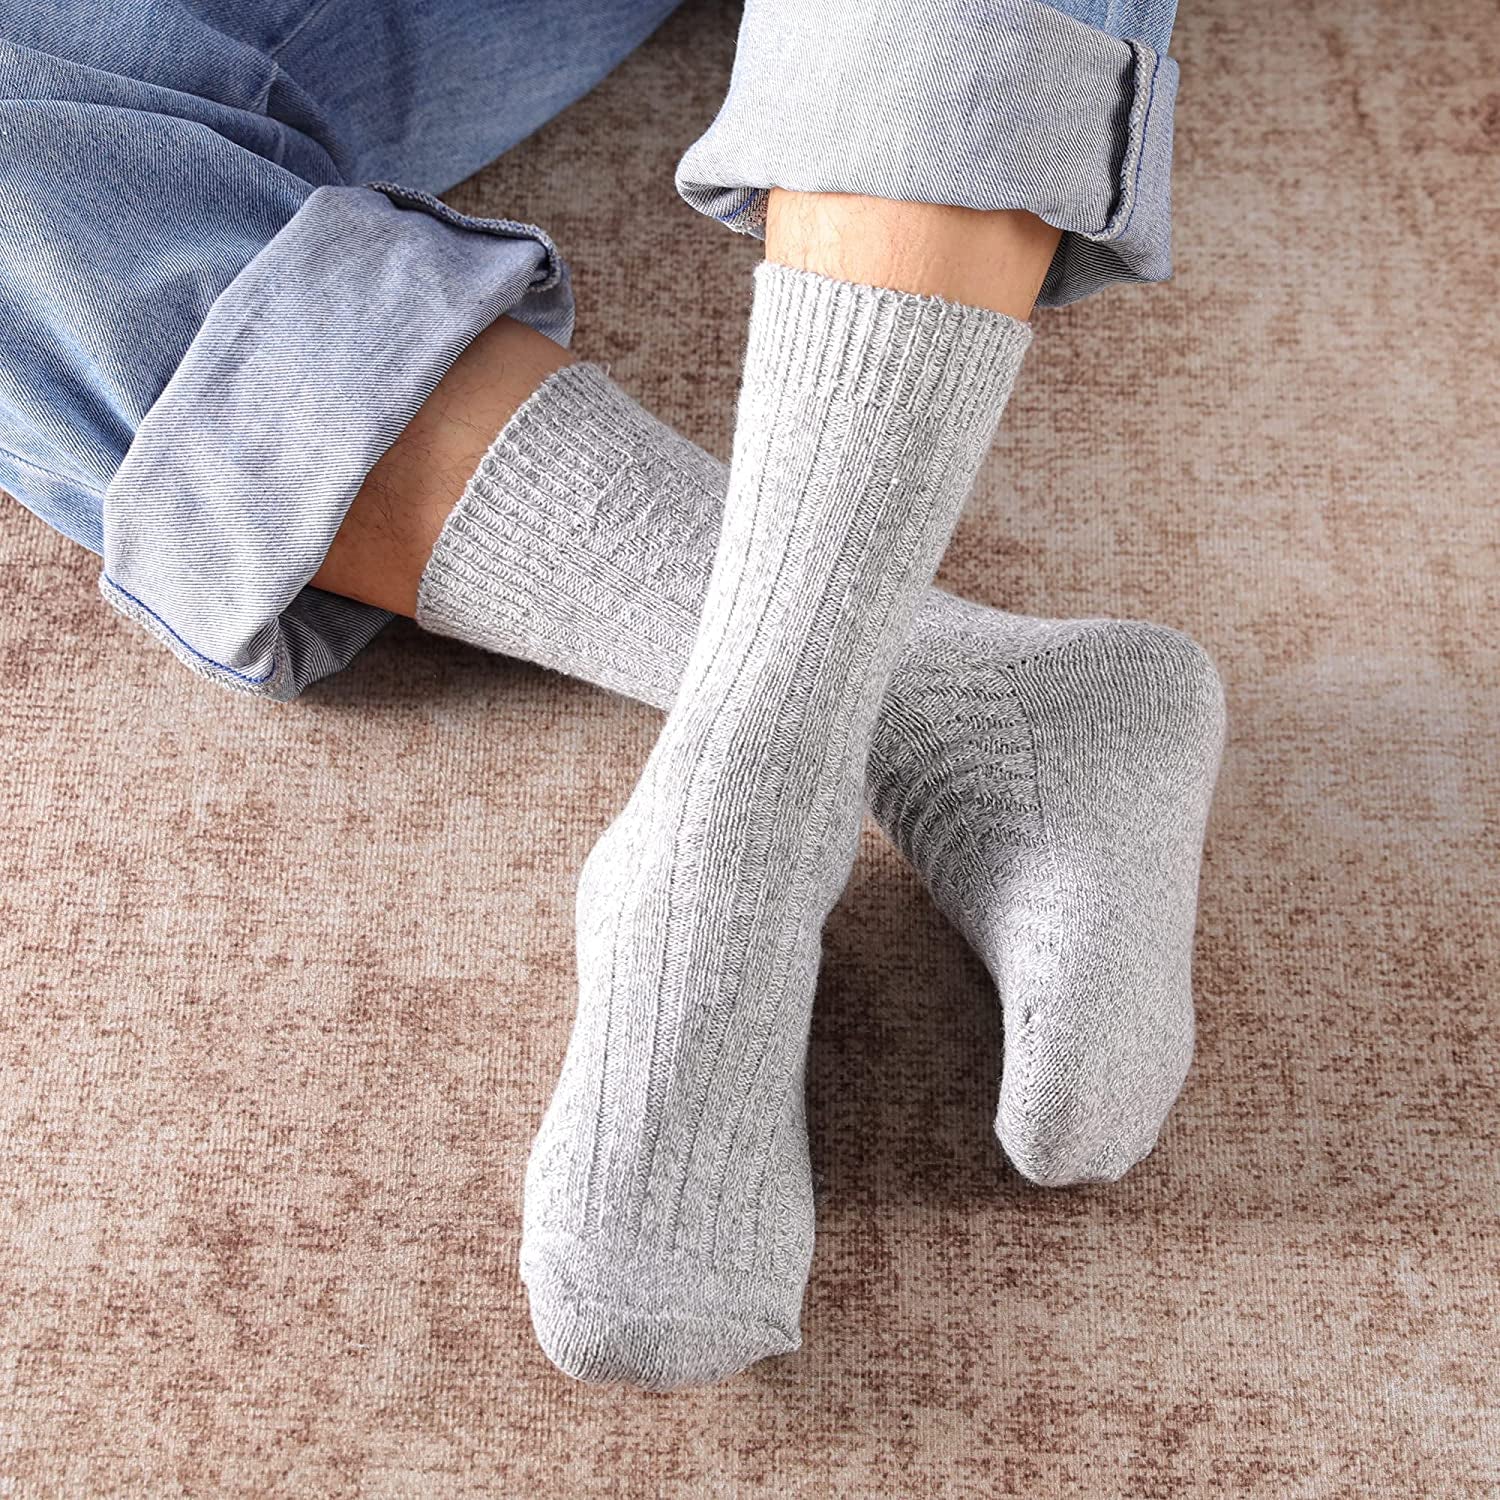 5 Pairs Wool Socks - Wool Socks for Women & Men Boot Socks Soft Crew Socks Winter Hiking Socks Thick Cozy Socks Warm Long Socks